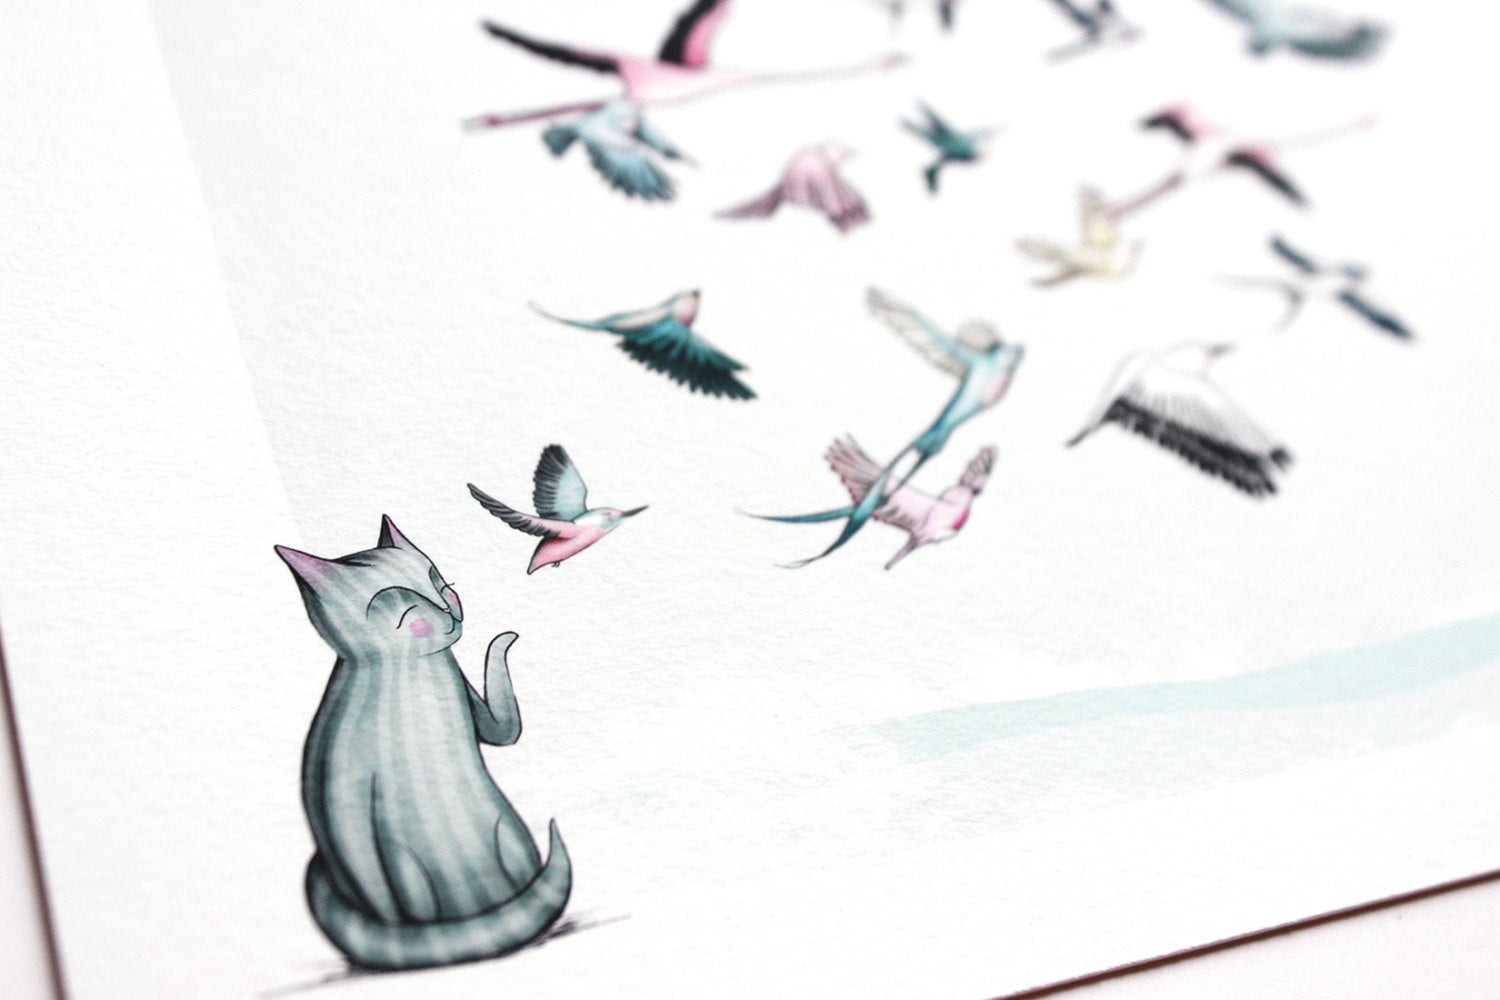 Cat Birds Print - "Freedom"